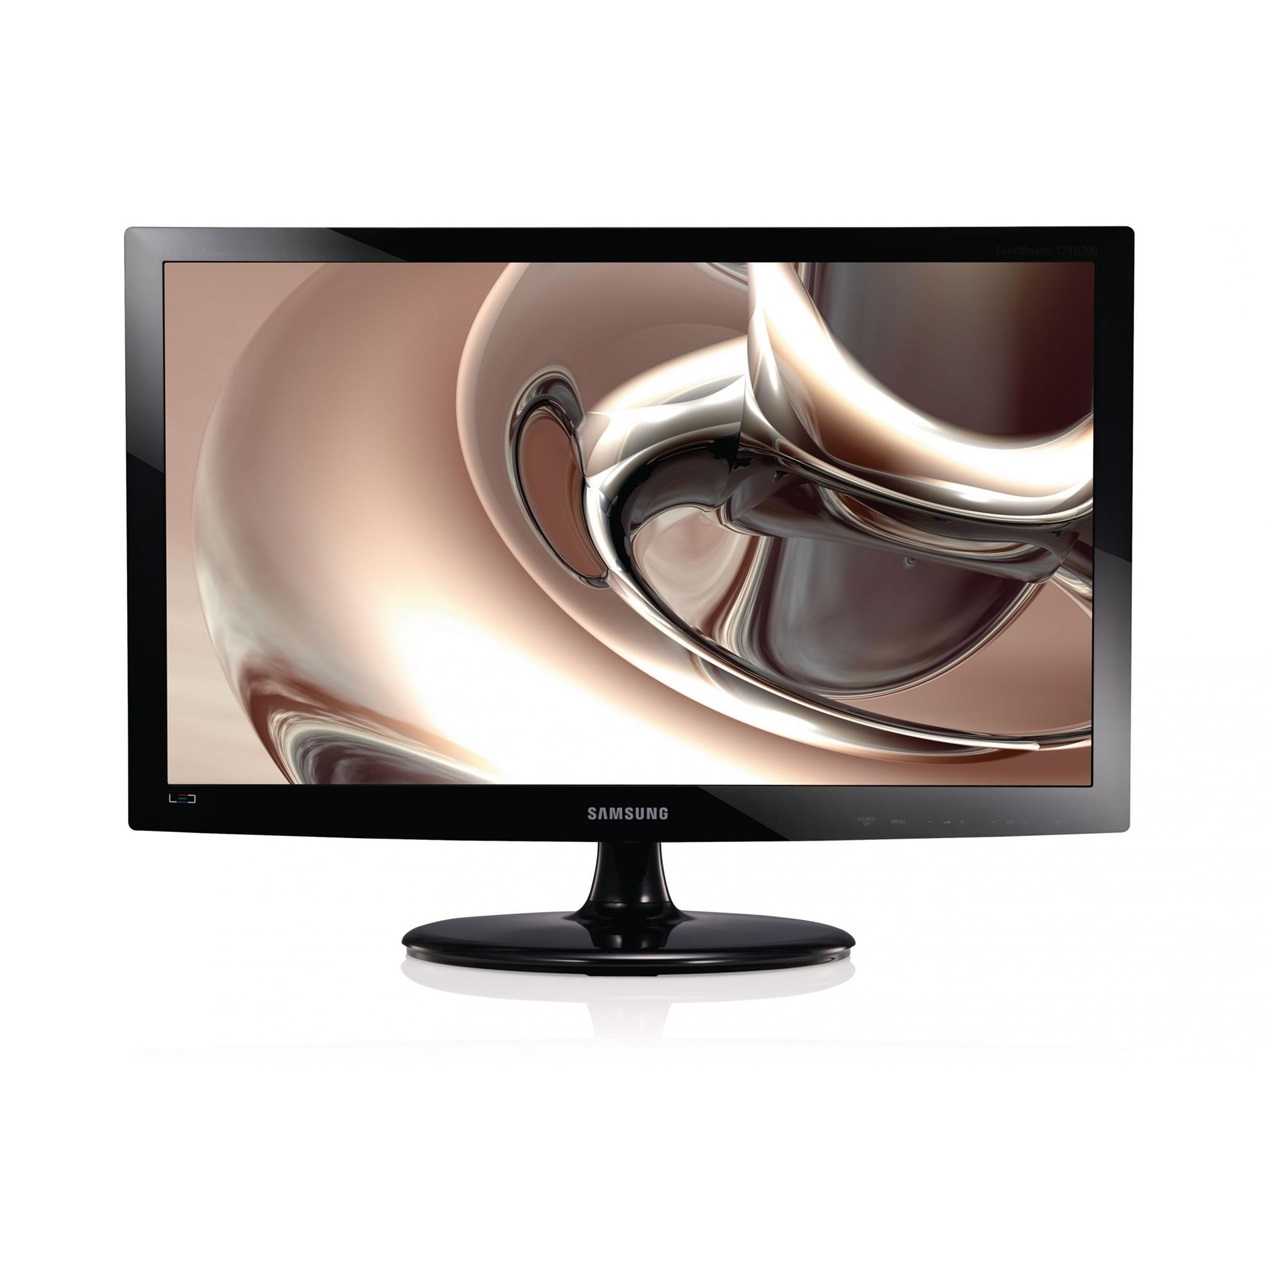 verzonden Handel heelal 22 inch LCD LED TV monitor scherm Full-HD - ENJY VERHUUR